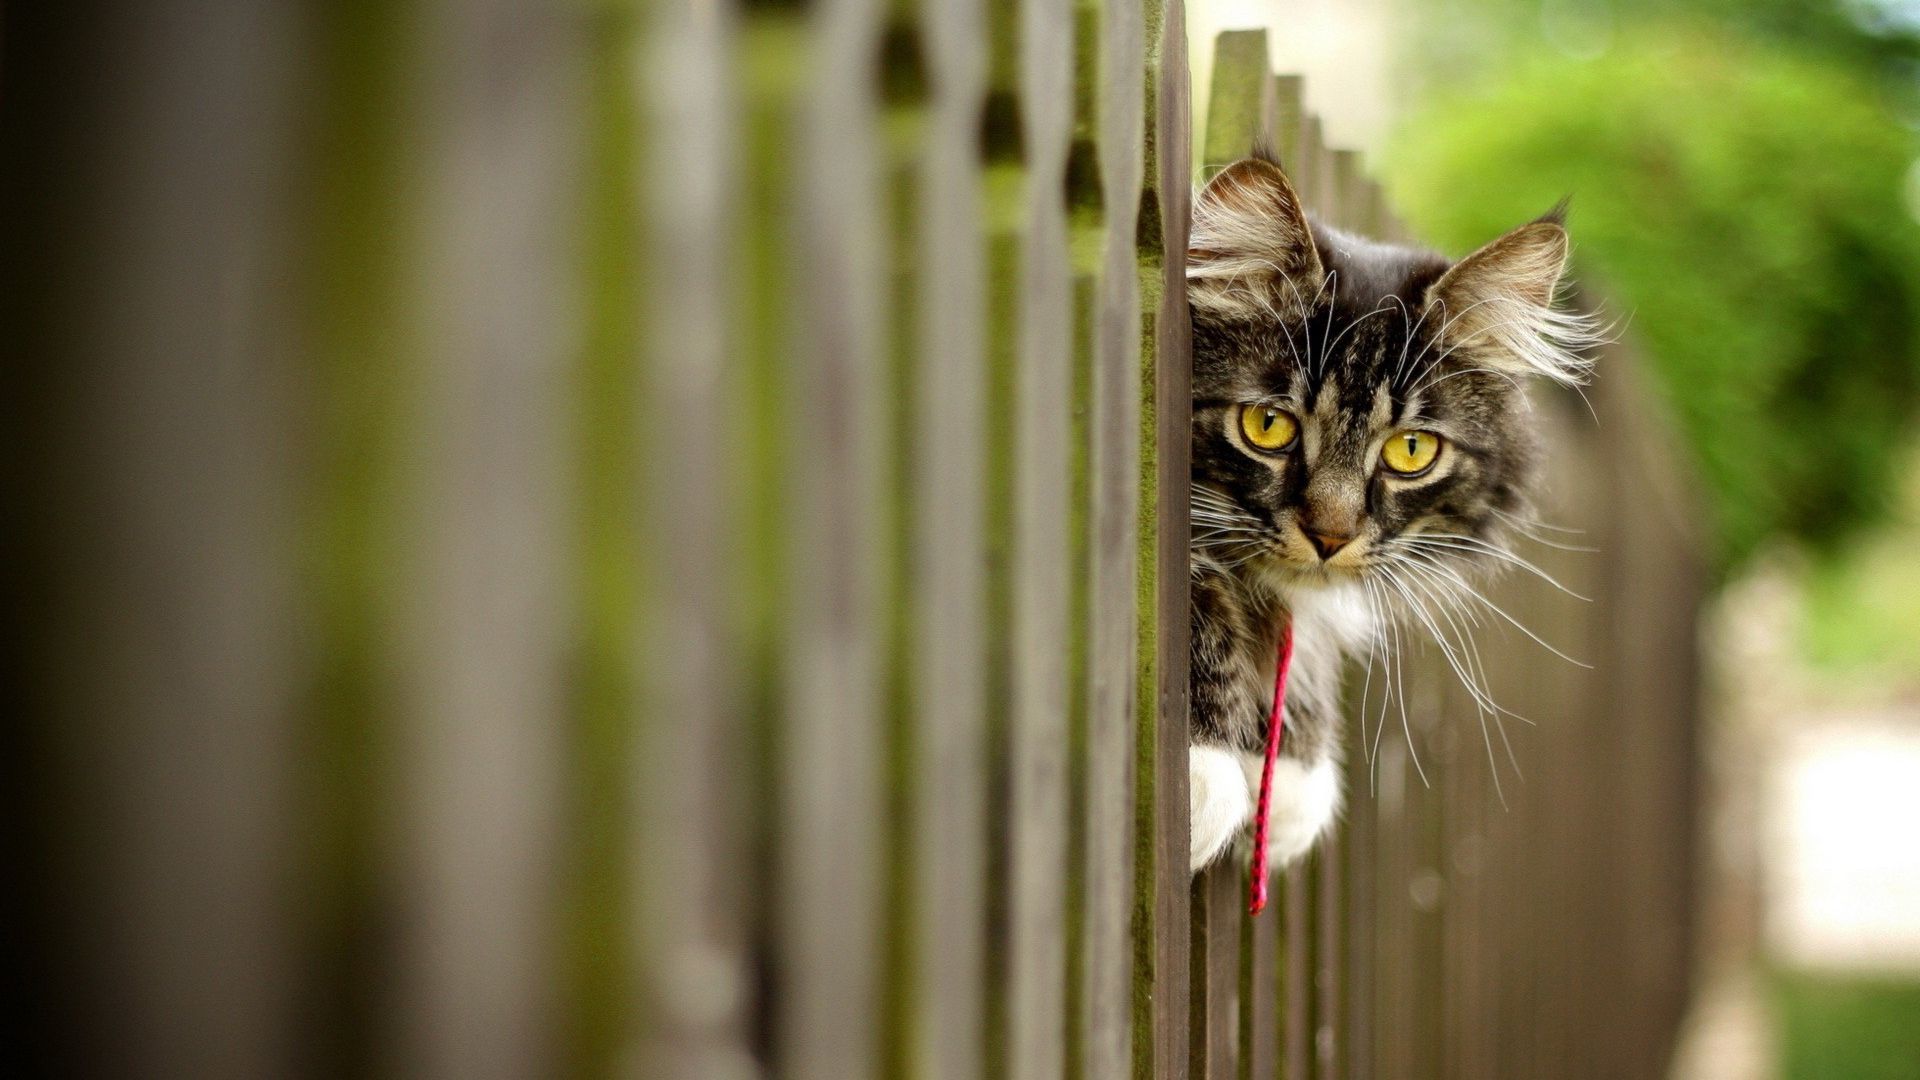 Wallpaper Cat hidden behind wooden fence